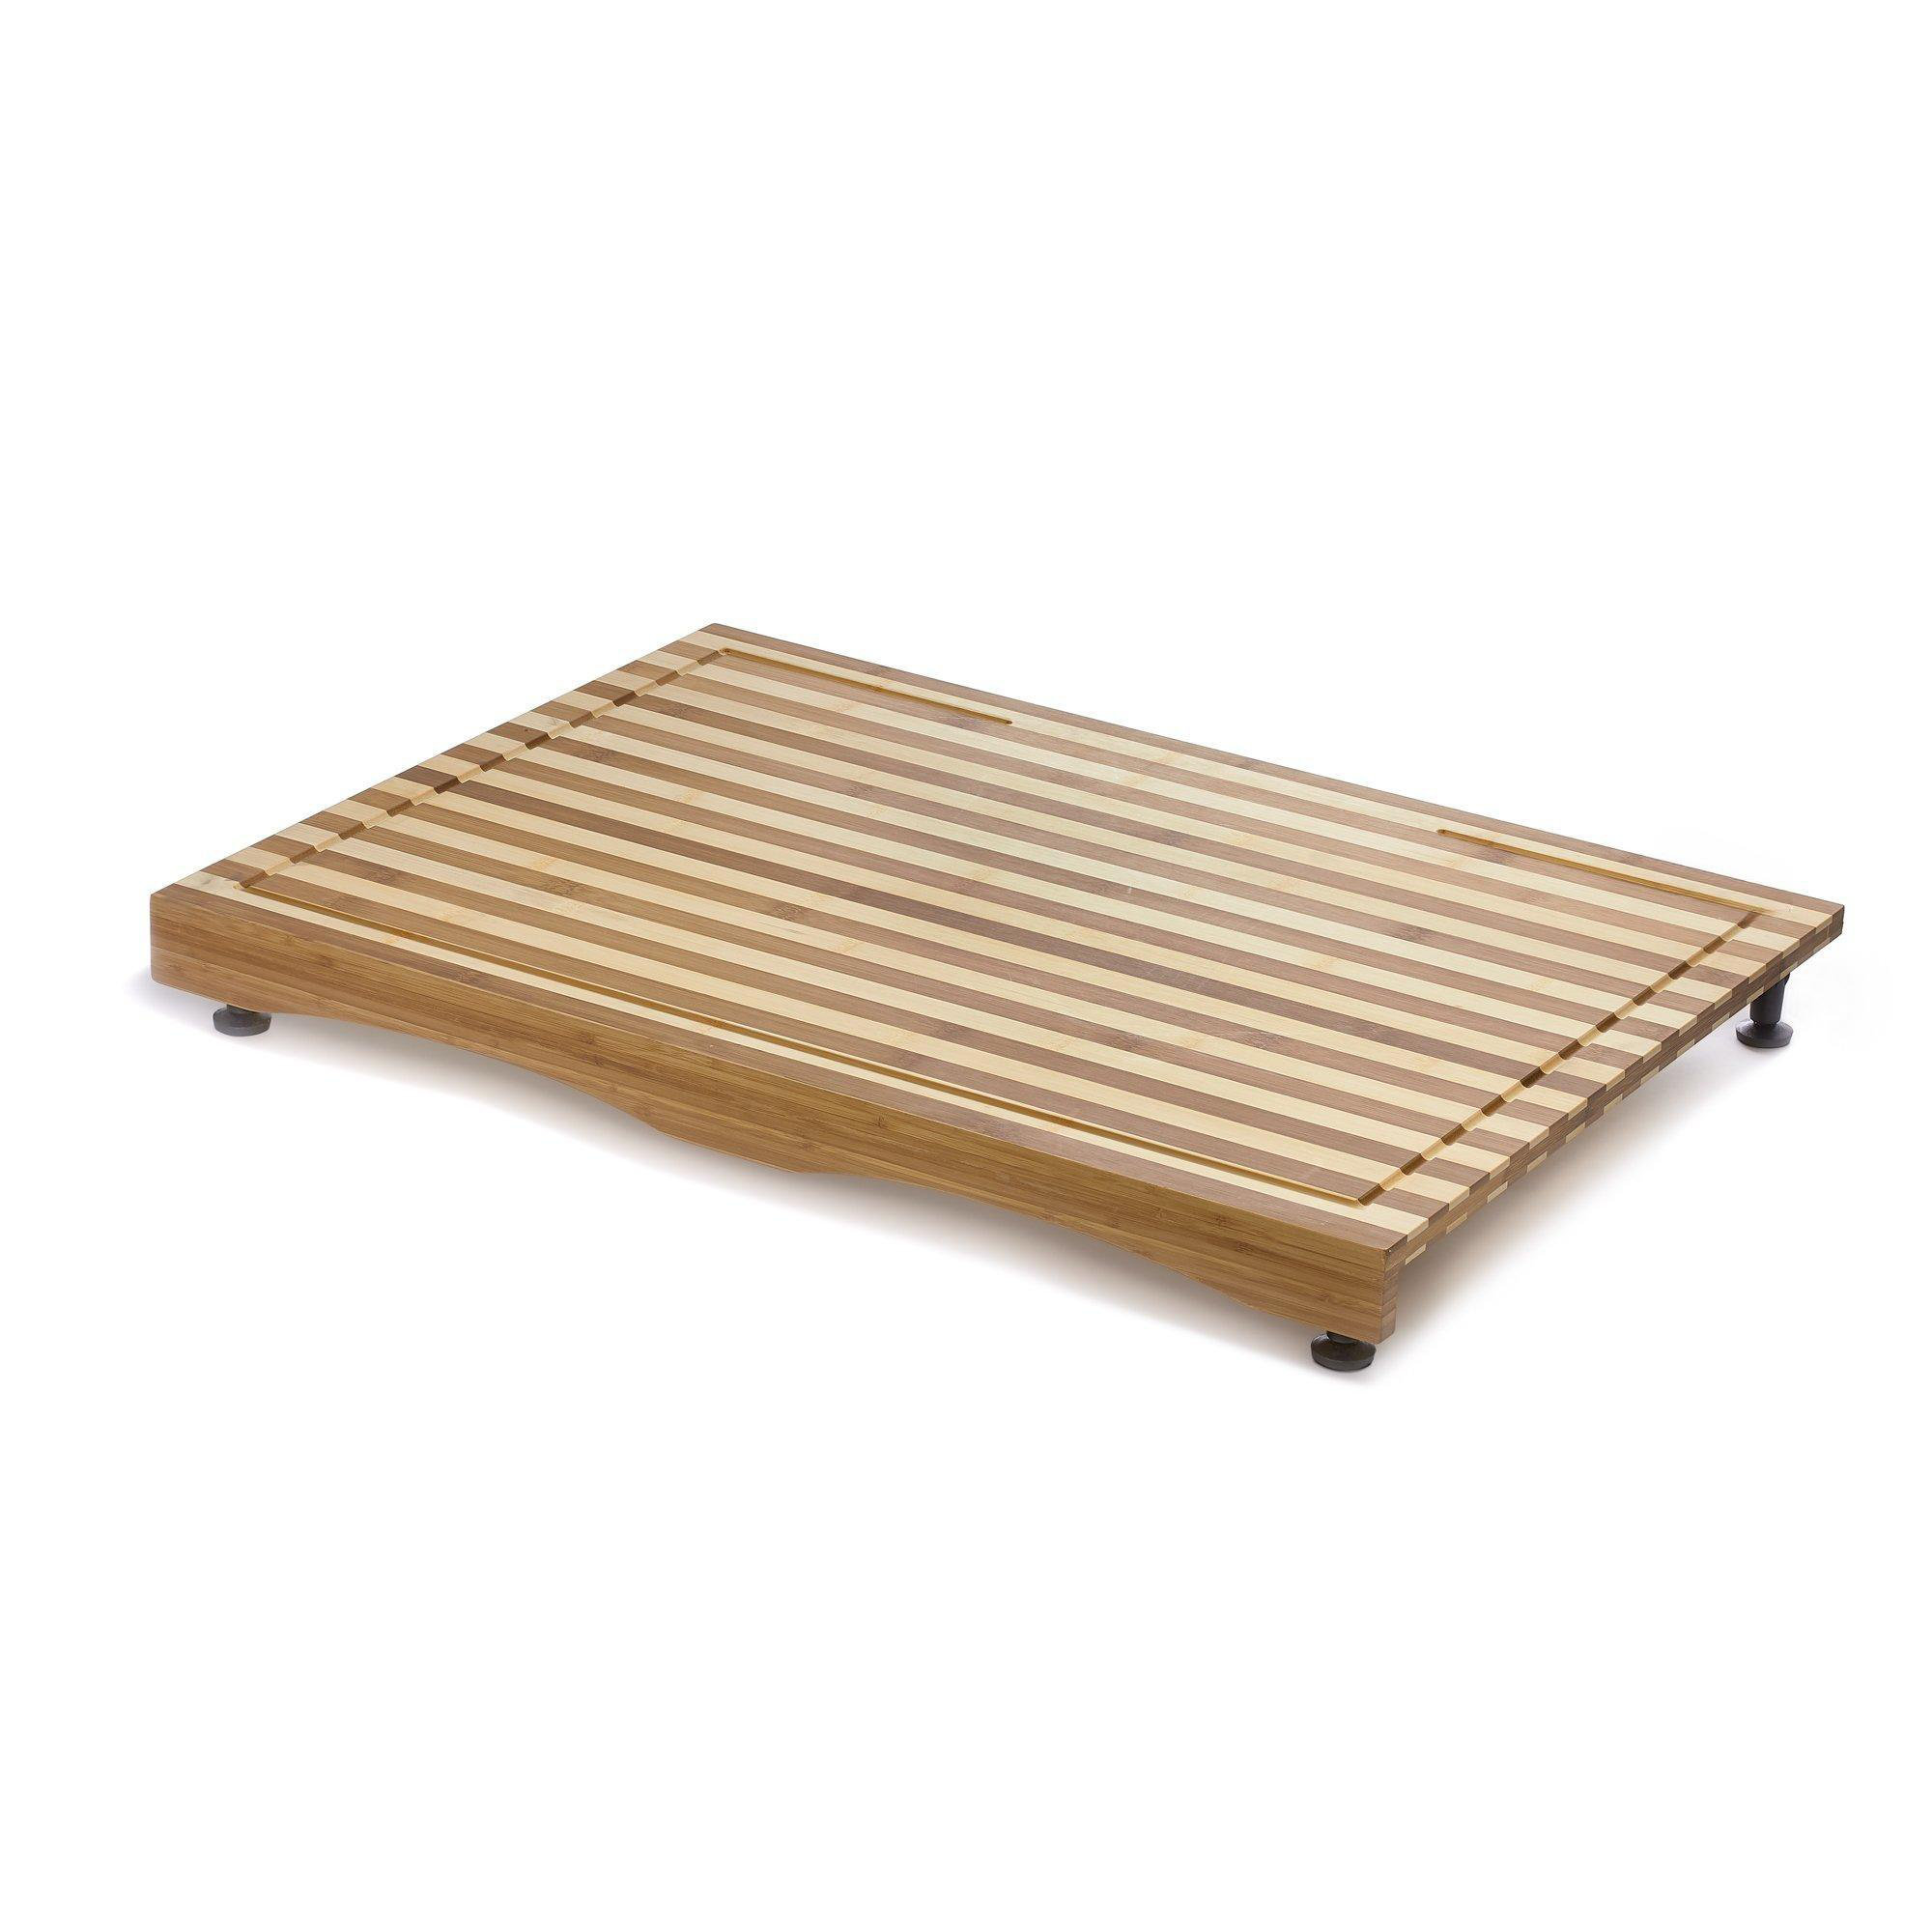 Countertop Cutting Board with Adjustable Legs, Dual-purpose Chopping Board,Bamboo Bassetts